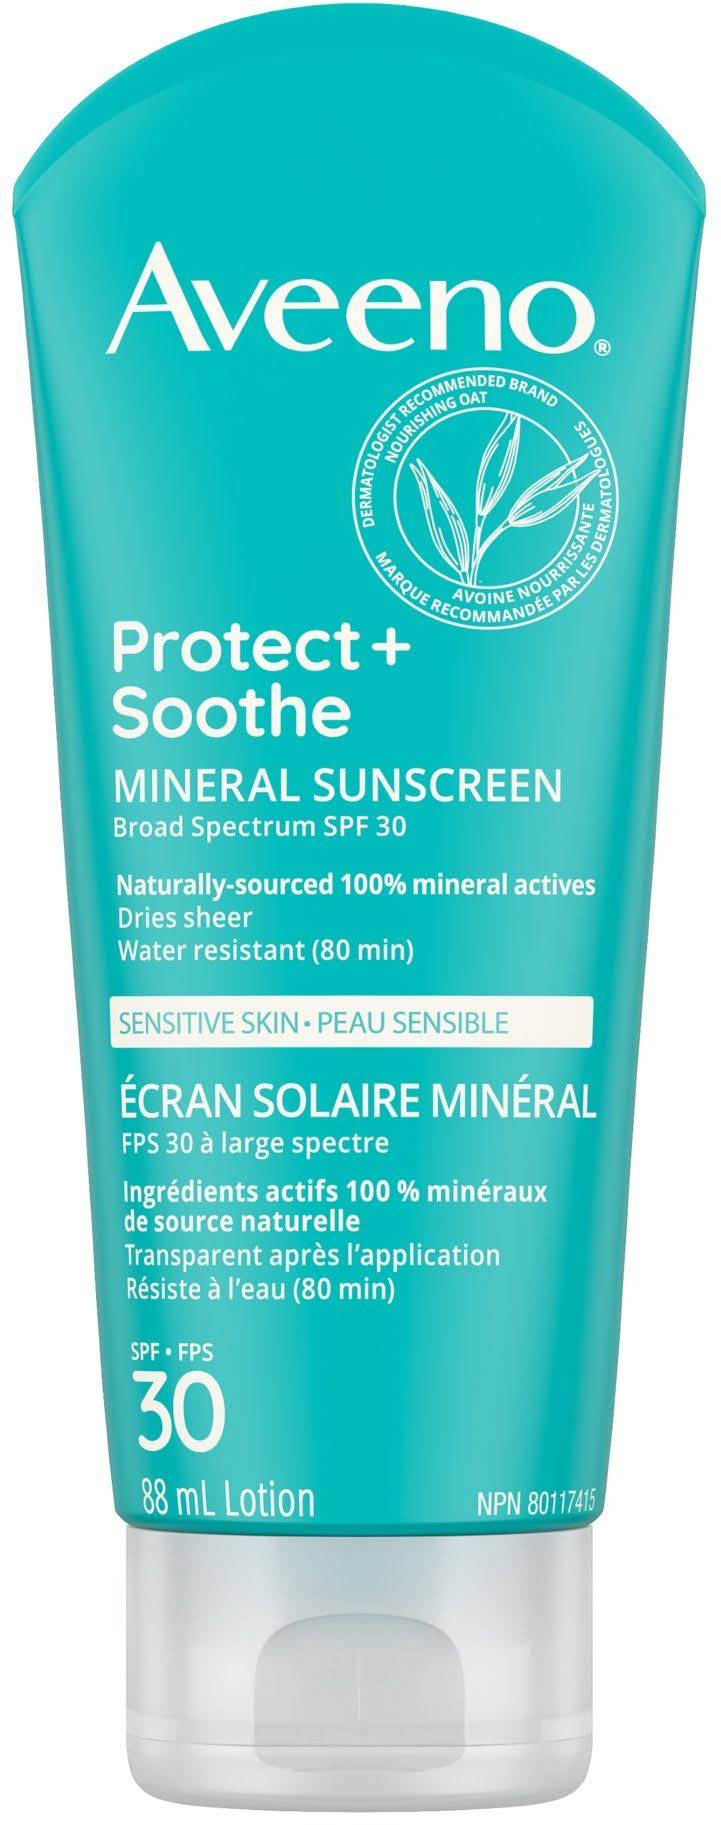 Aveeno Protect + Soothe Sensitive Skin Mineral Sunscreen SPF 30, 88mL